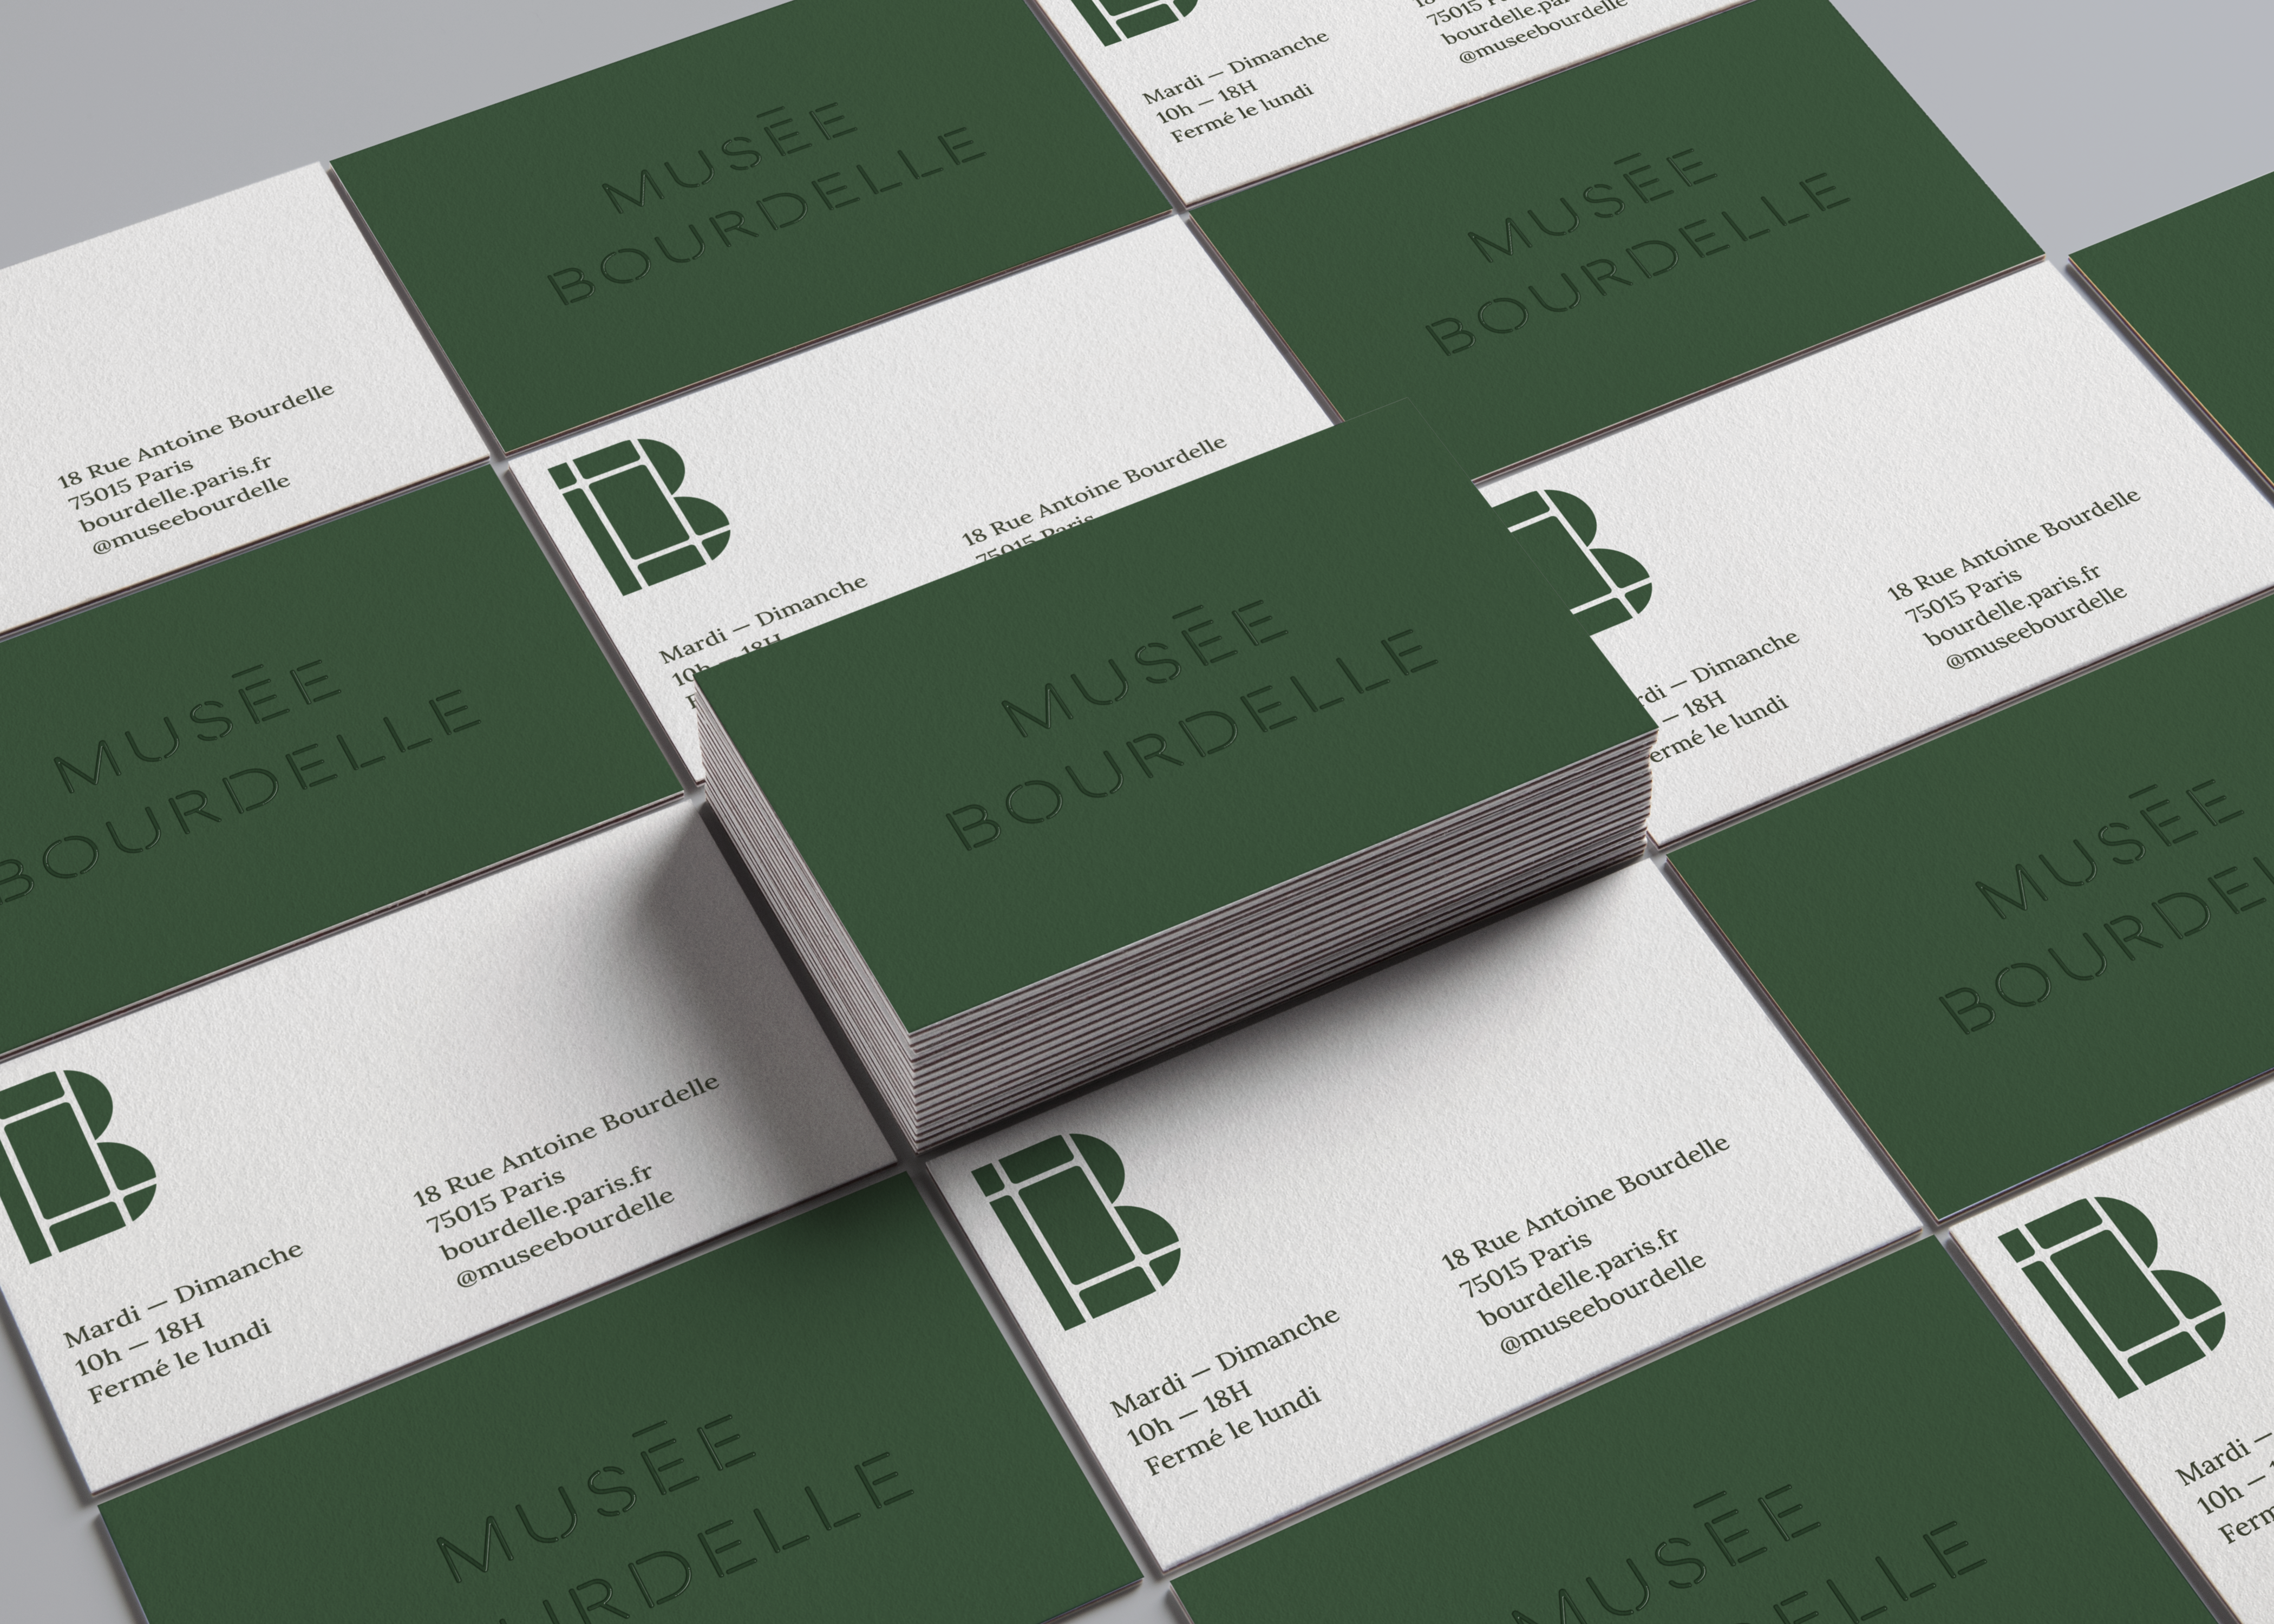 Perspective Business Cards MockUp-Bourdelle.png